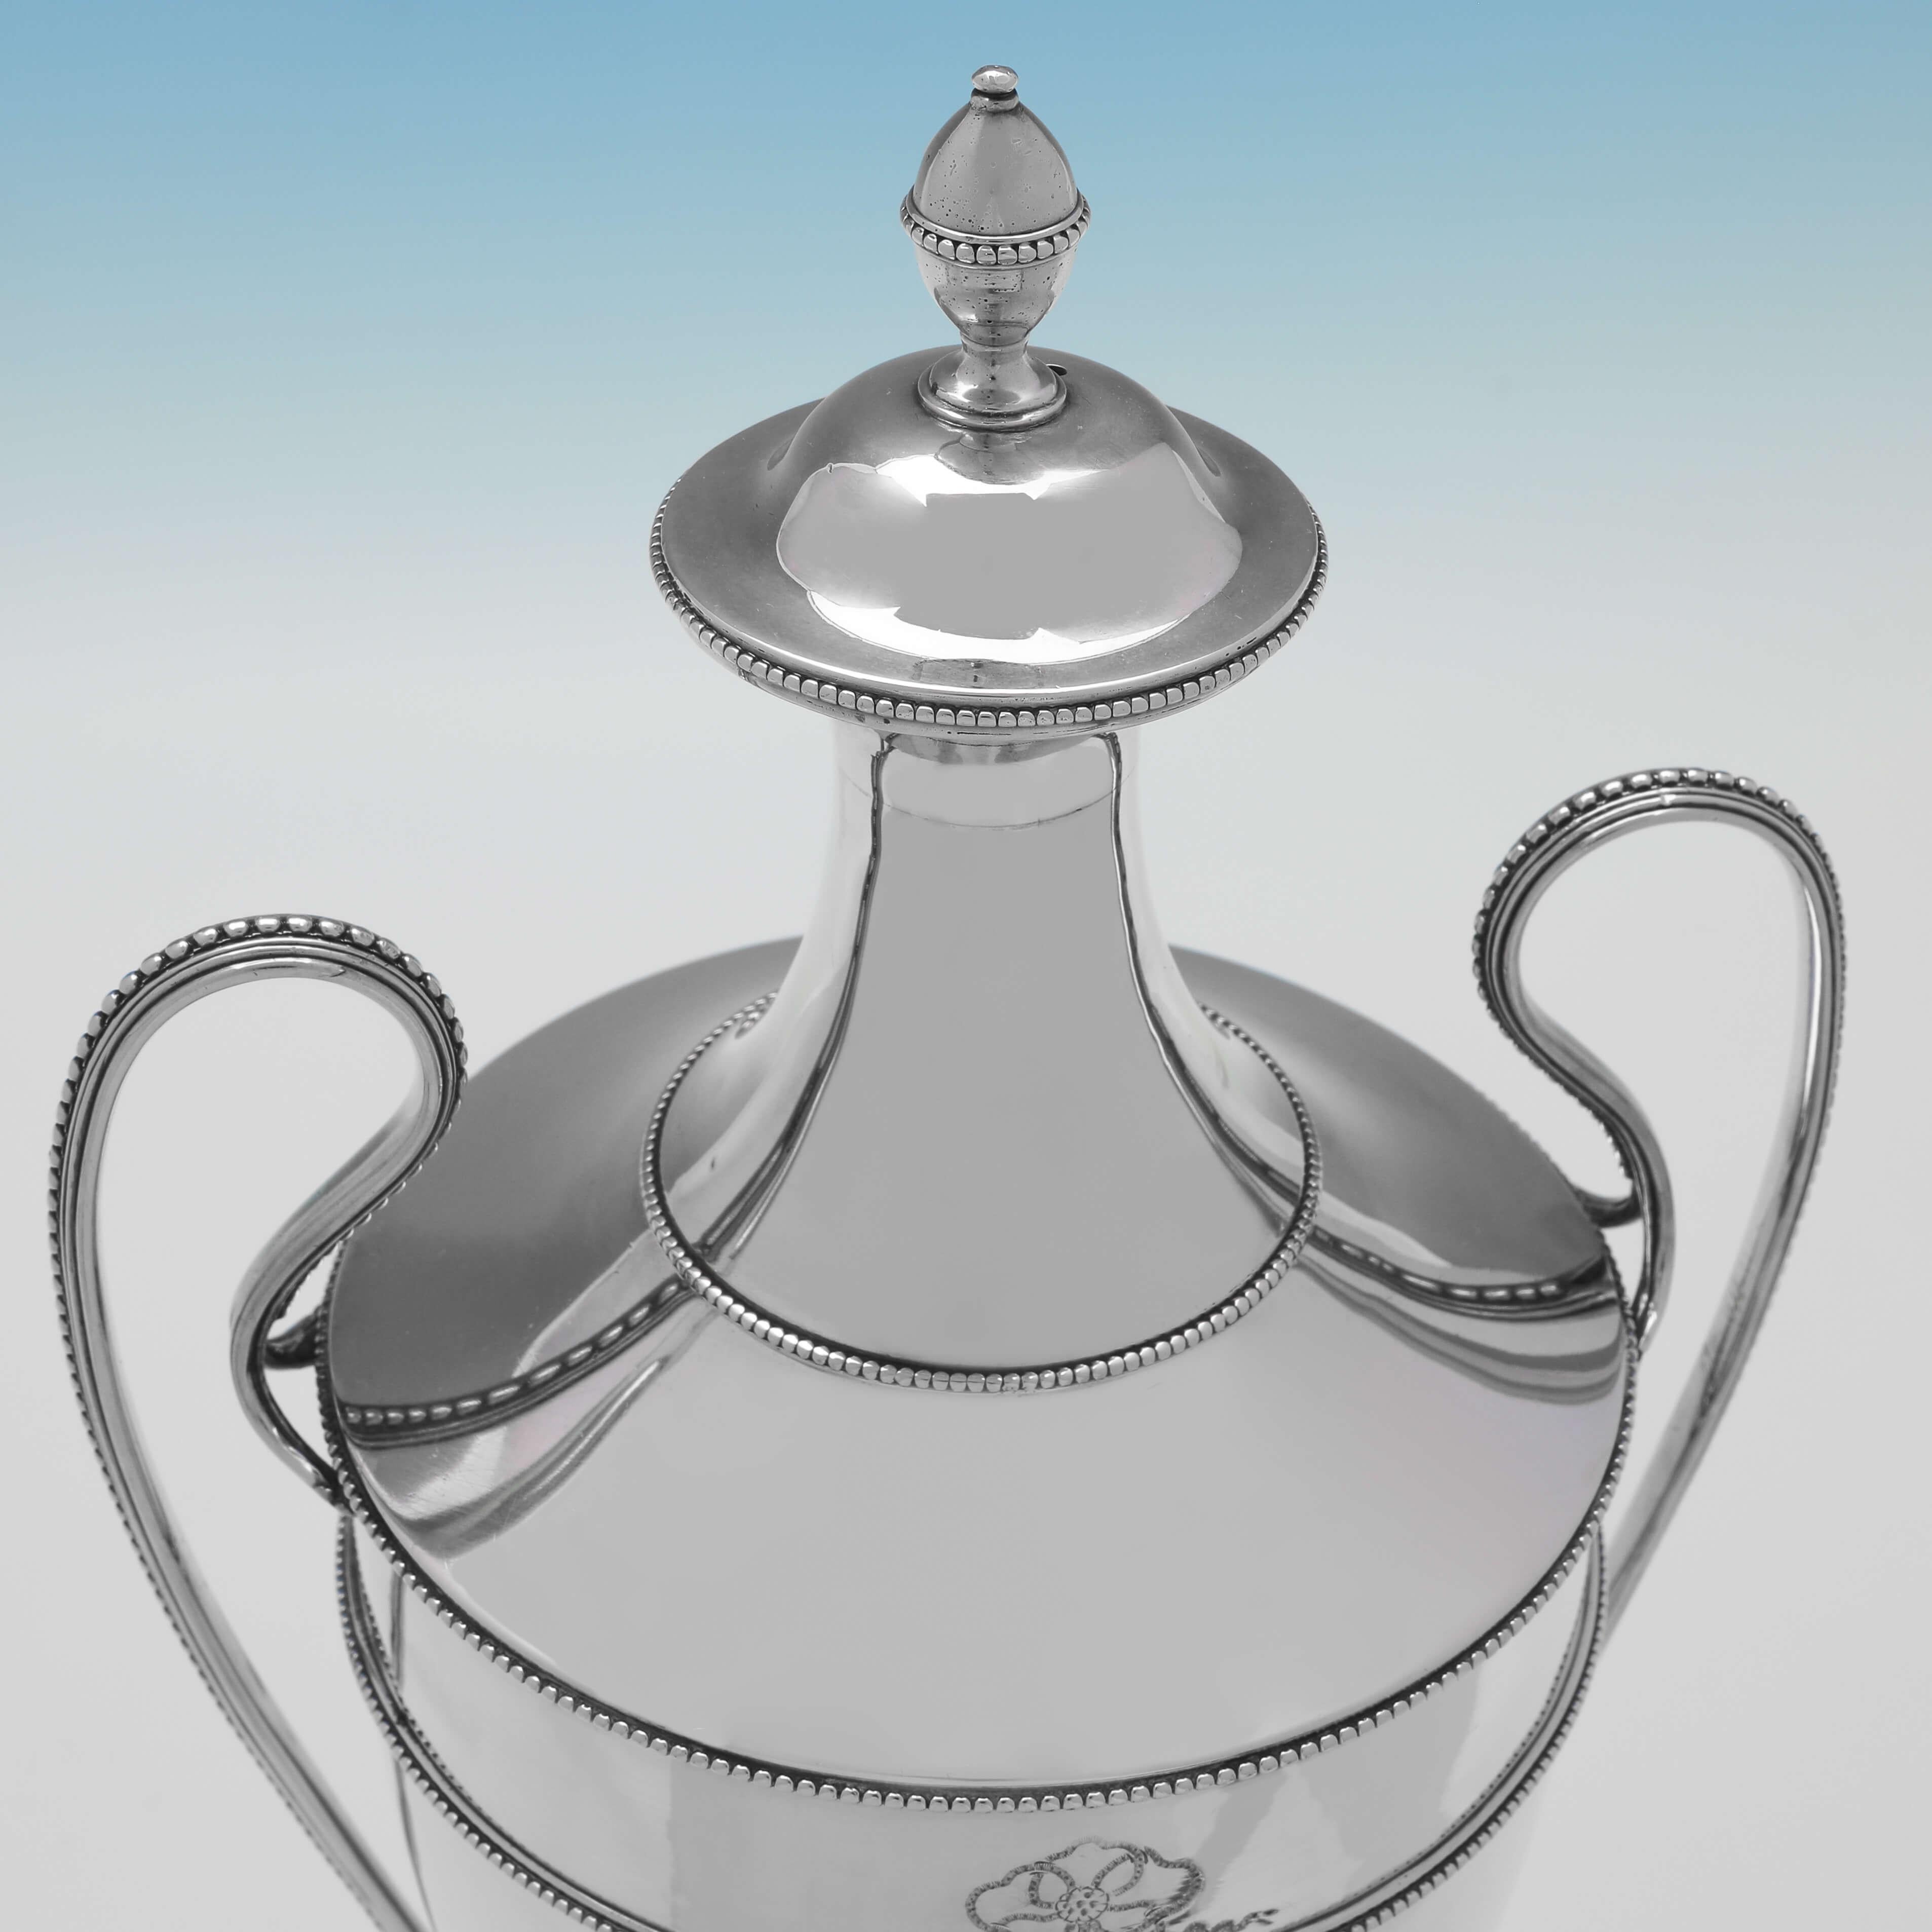 English Hester Bateman - Neoclassical Antique Sterling Silver Tea Urn - London 1780 